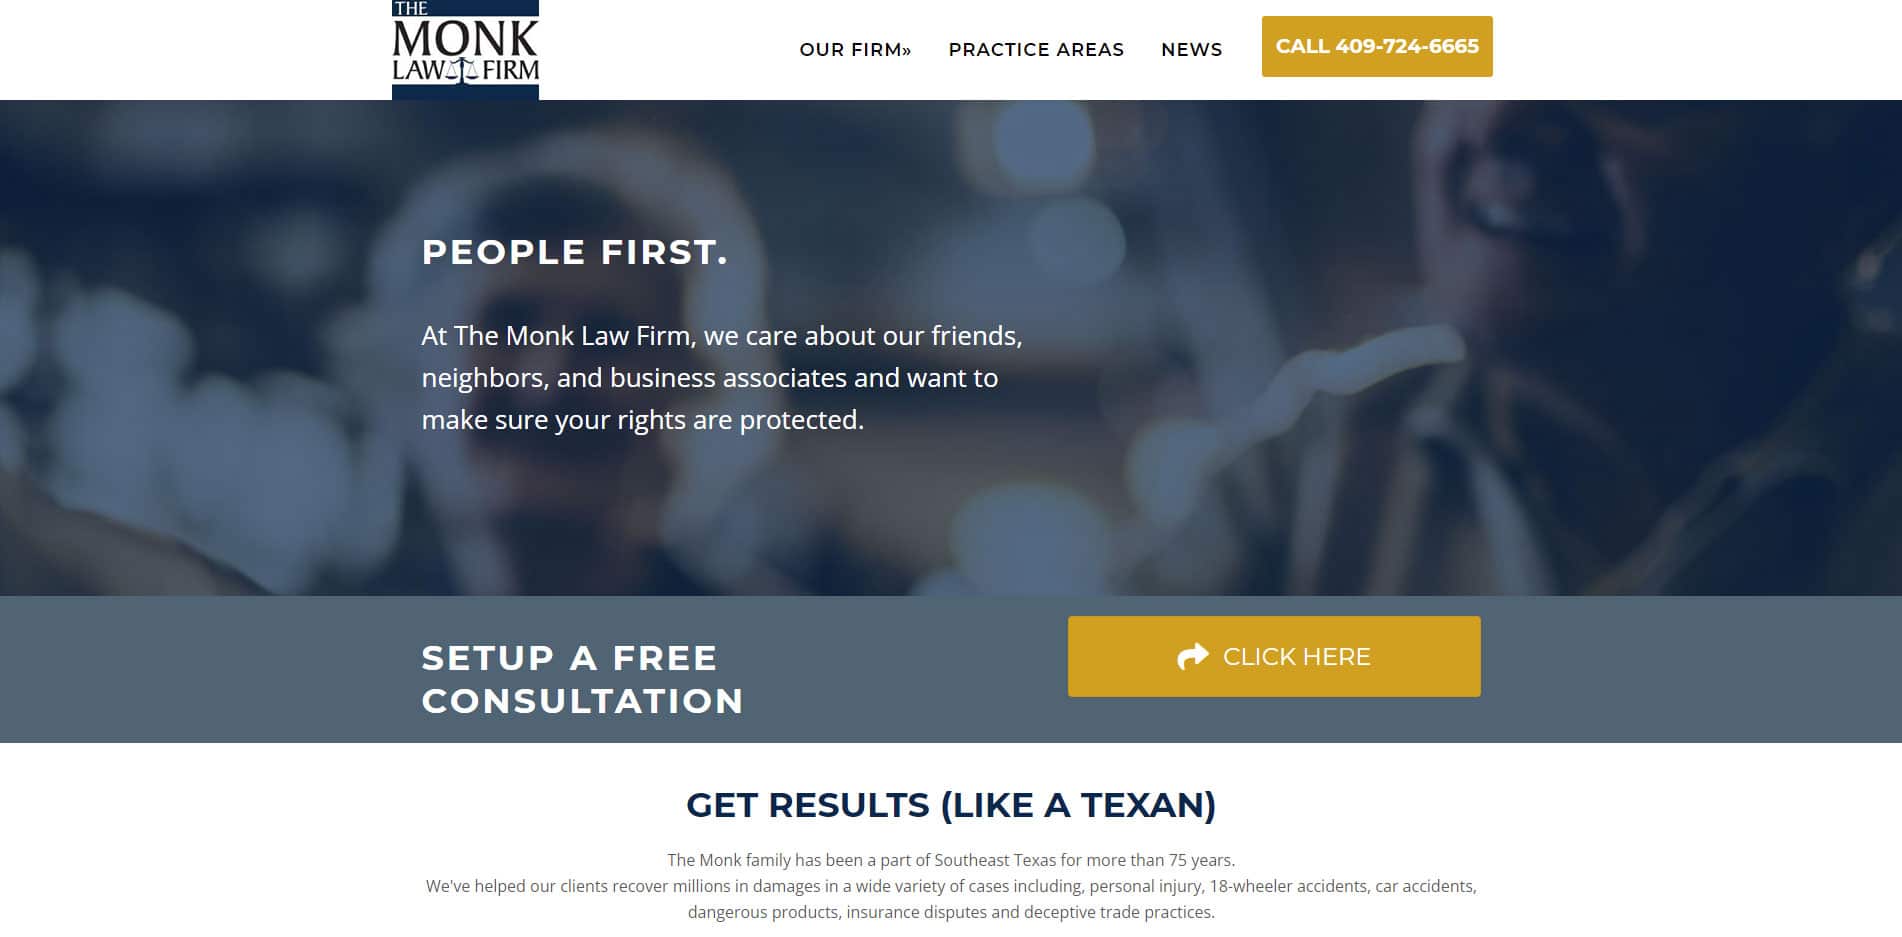 The Monk Law Firm Website Design & Development